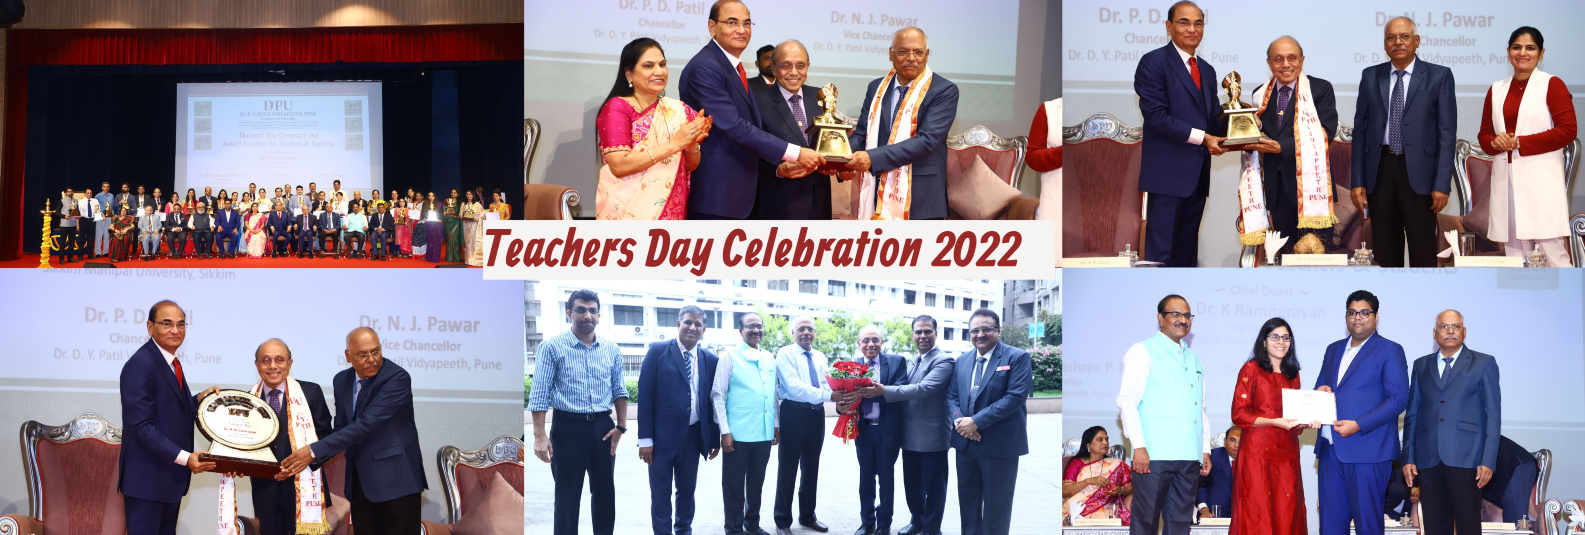 Teachres Day celebration 2022